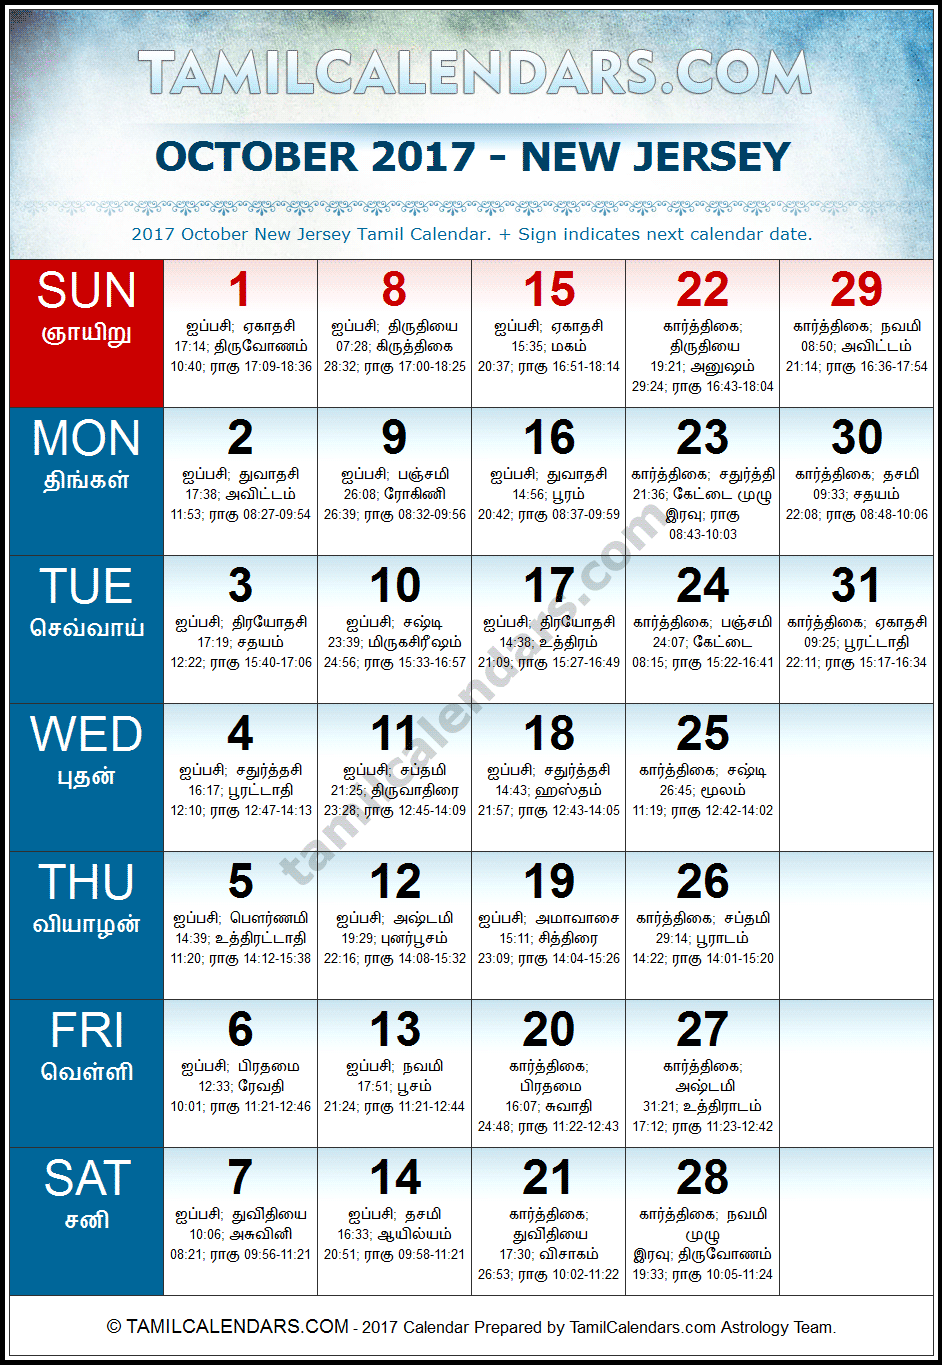 October 2017 Tamil Calendar for New Jersey, USA